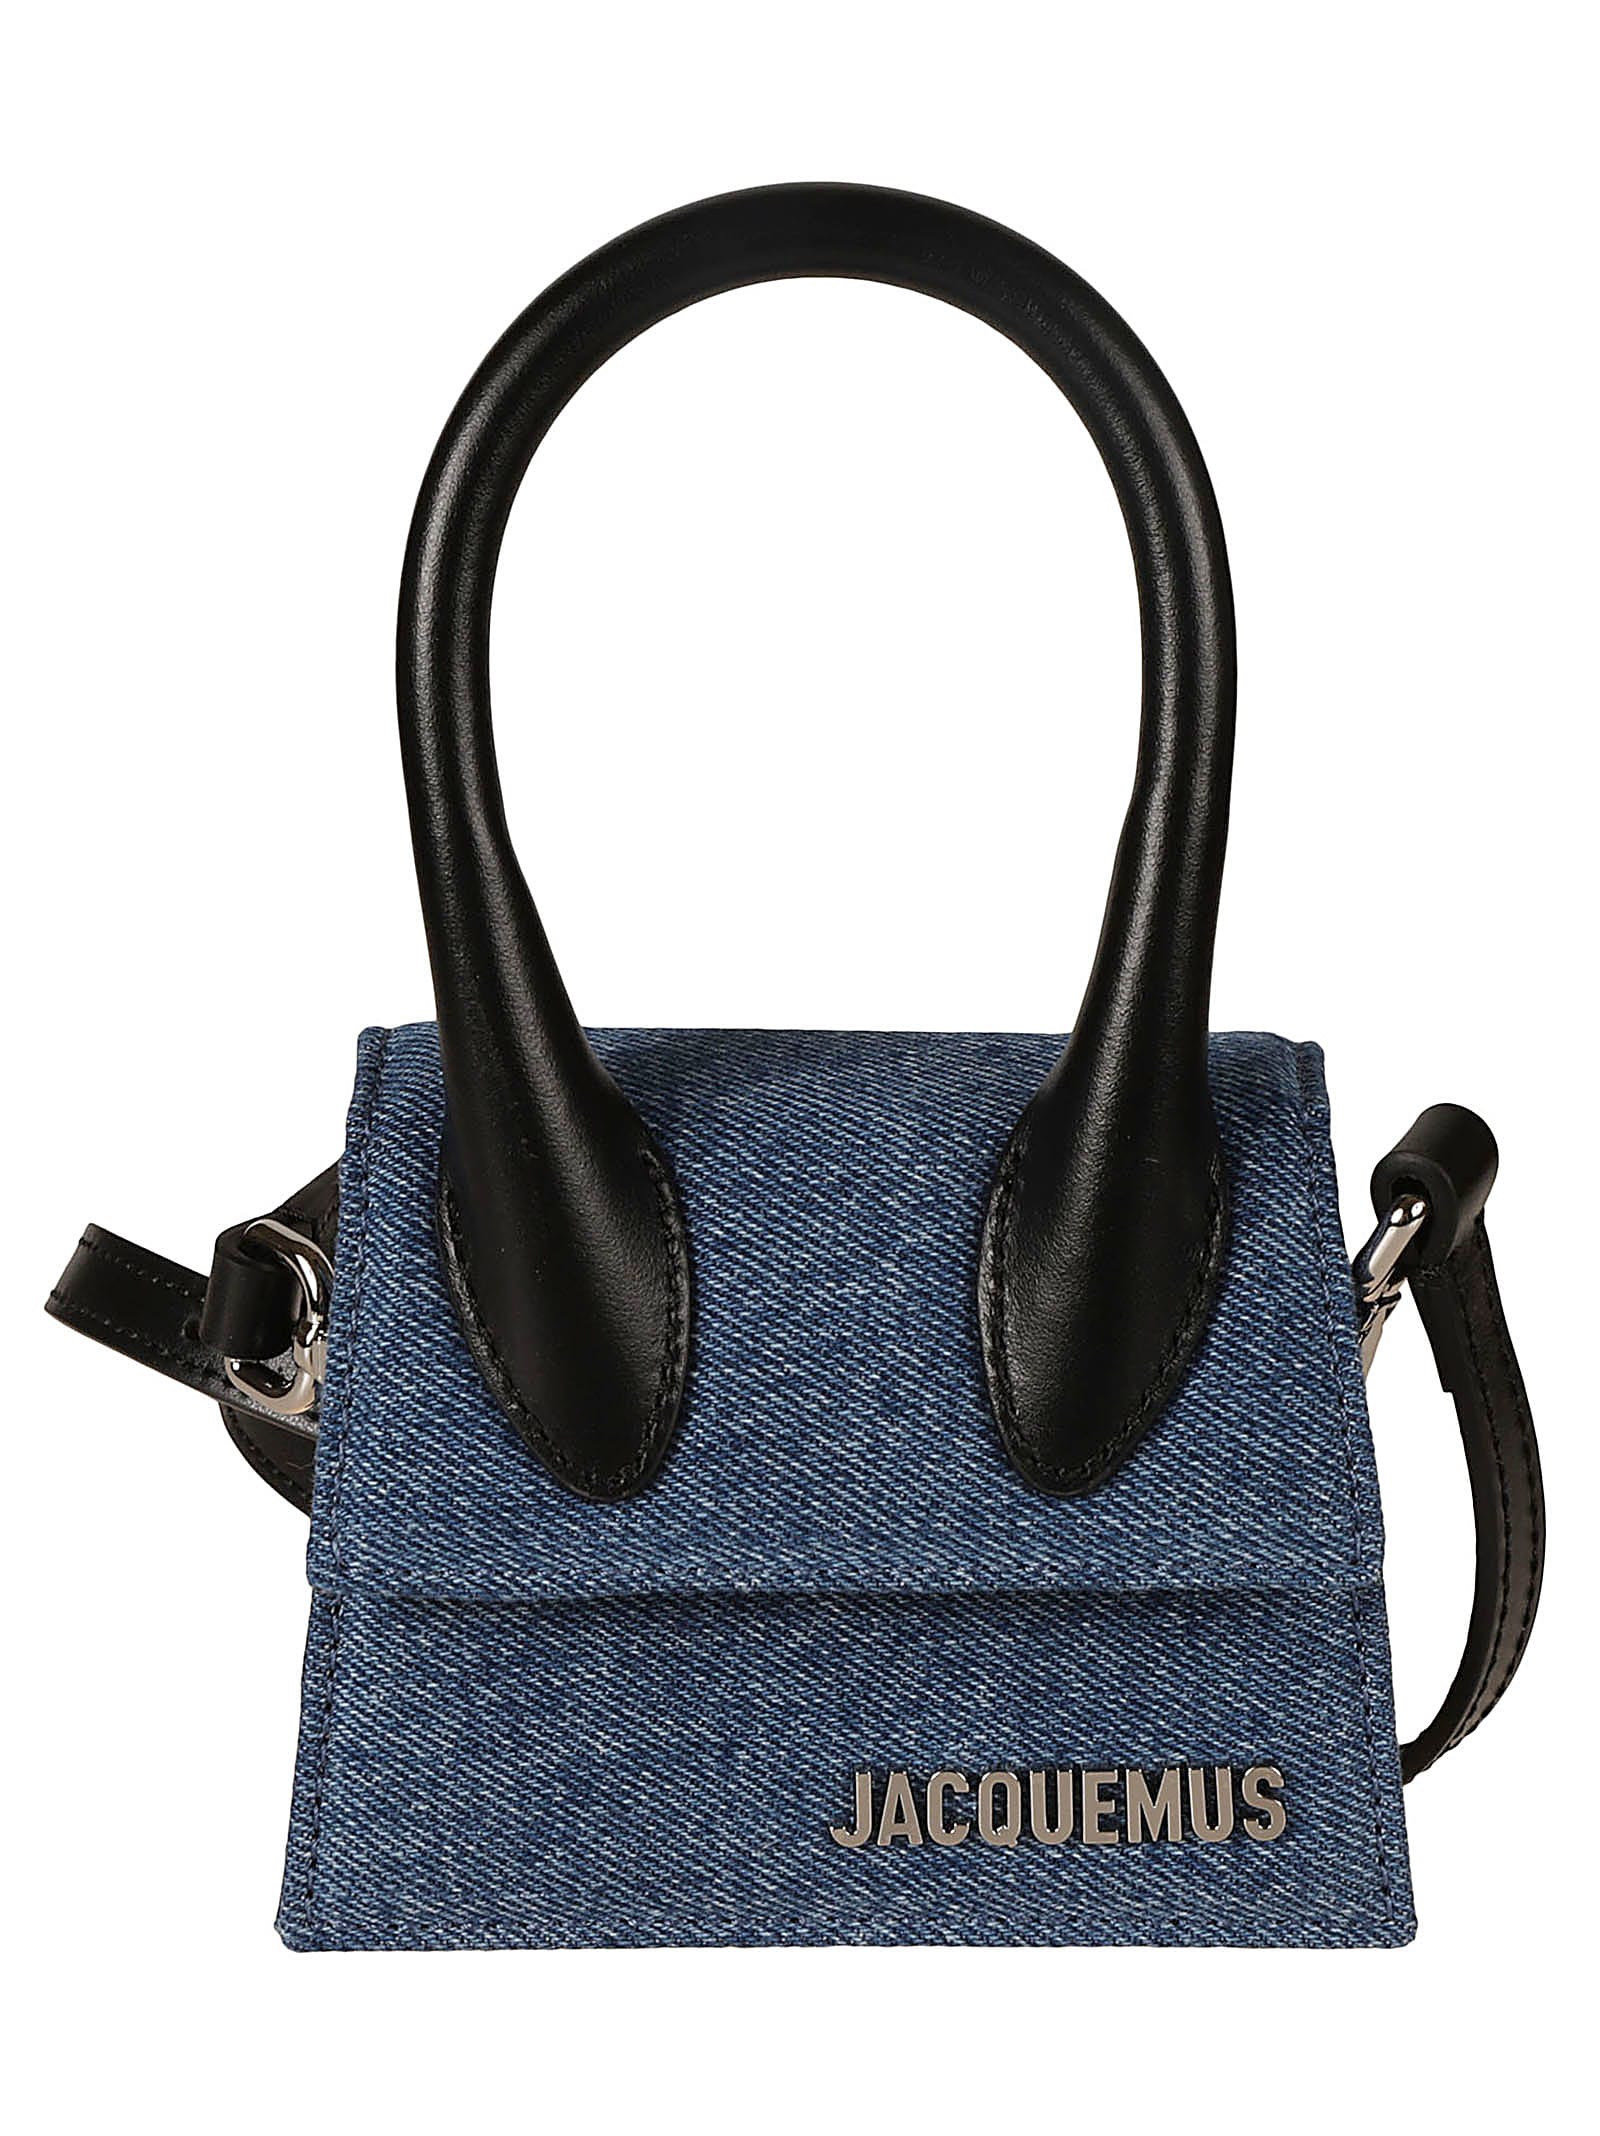 Jacquemus Le Chiquito Shoulder Bag In Blue